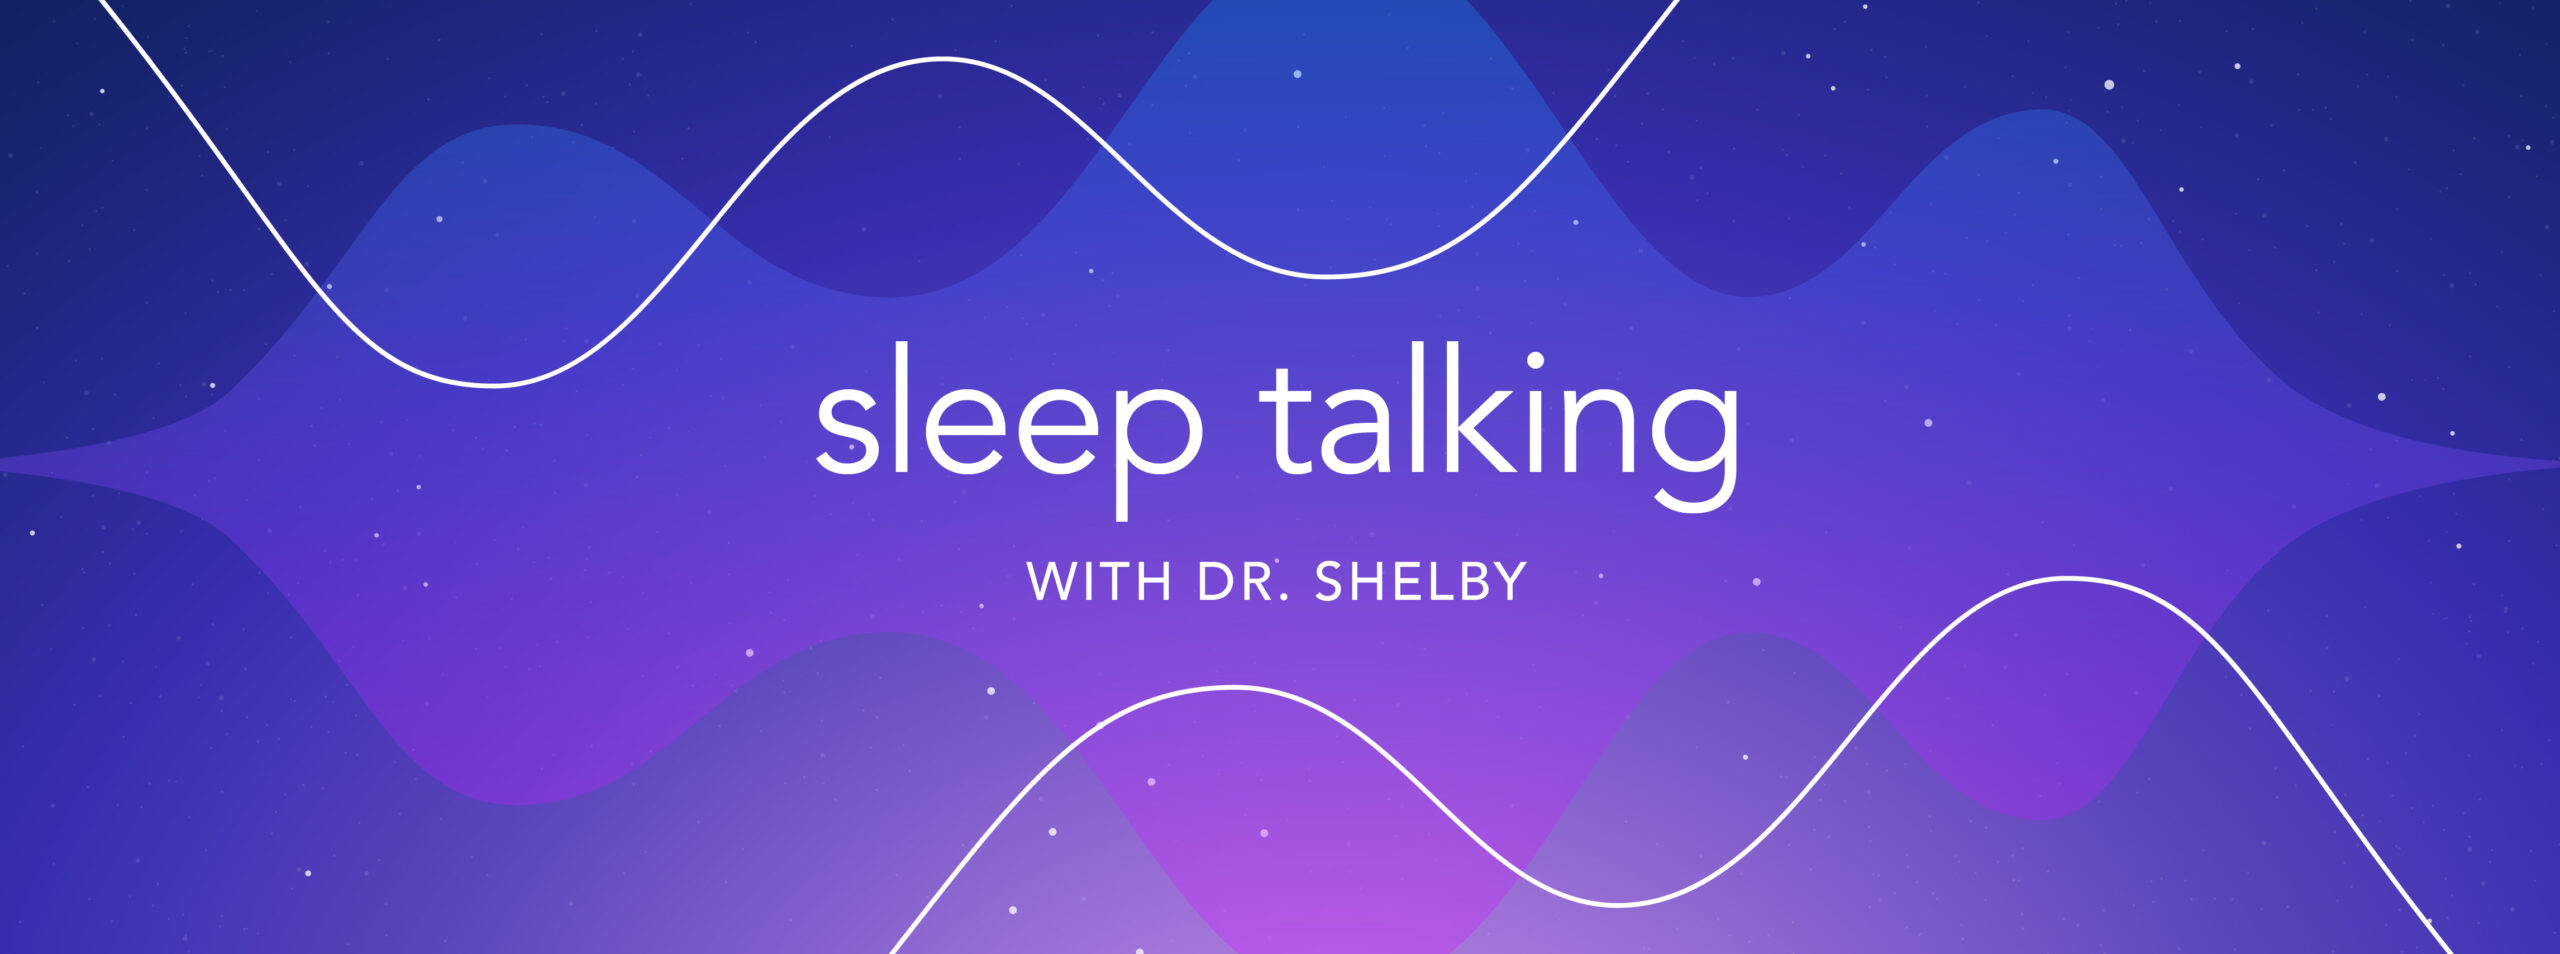 carolyn schur shiftwork and sleep podcast